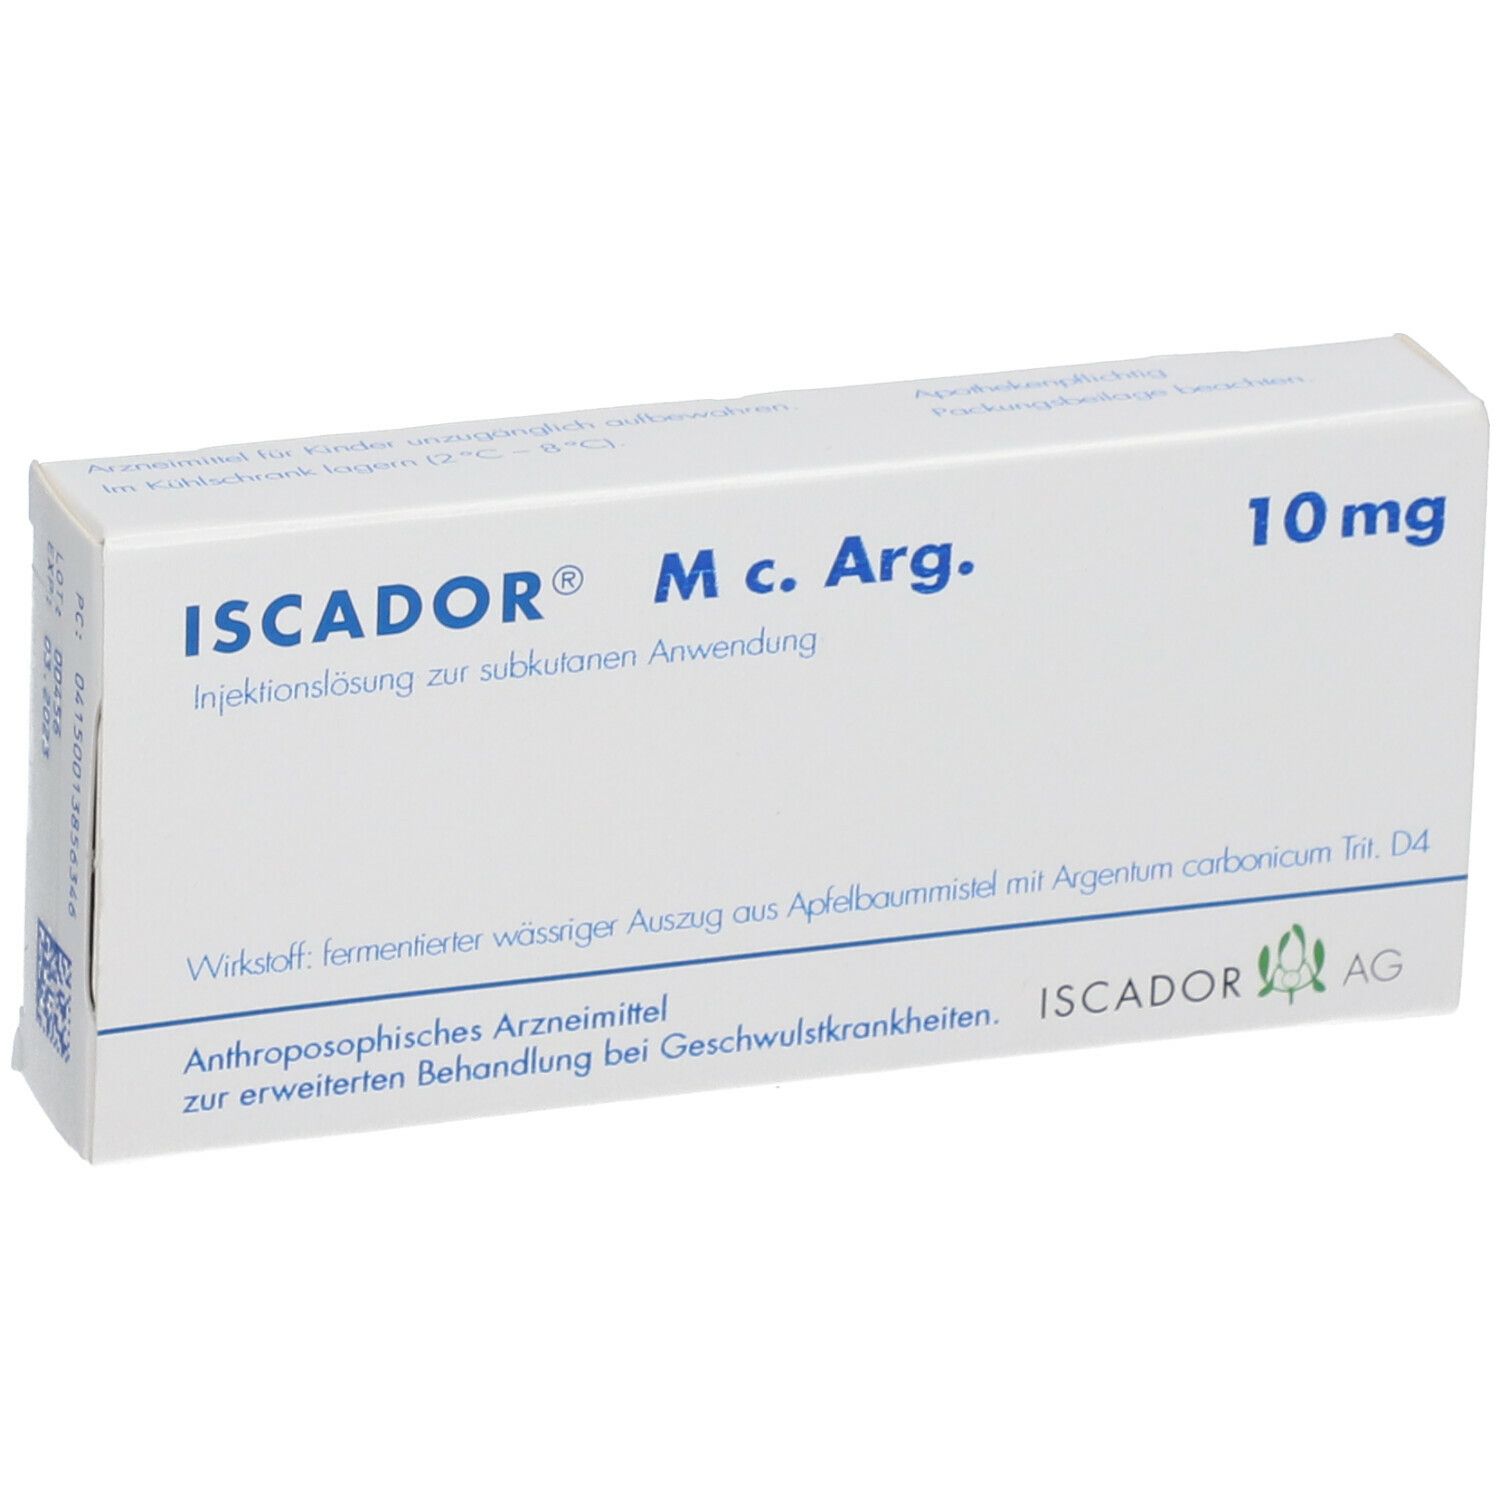 ISCADOR® M c. Arg. 10 mg